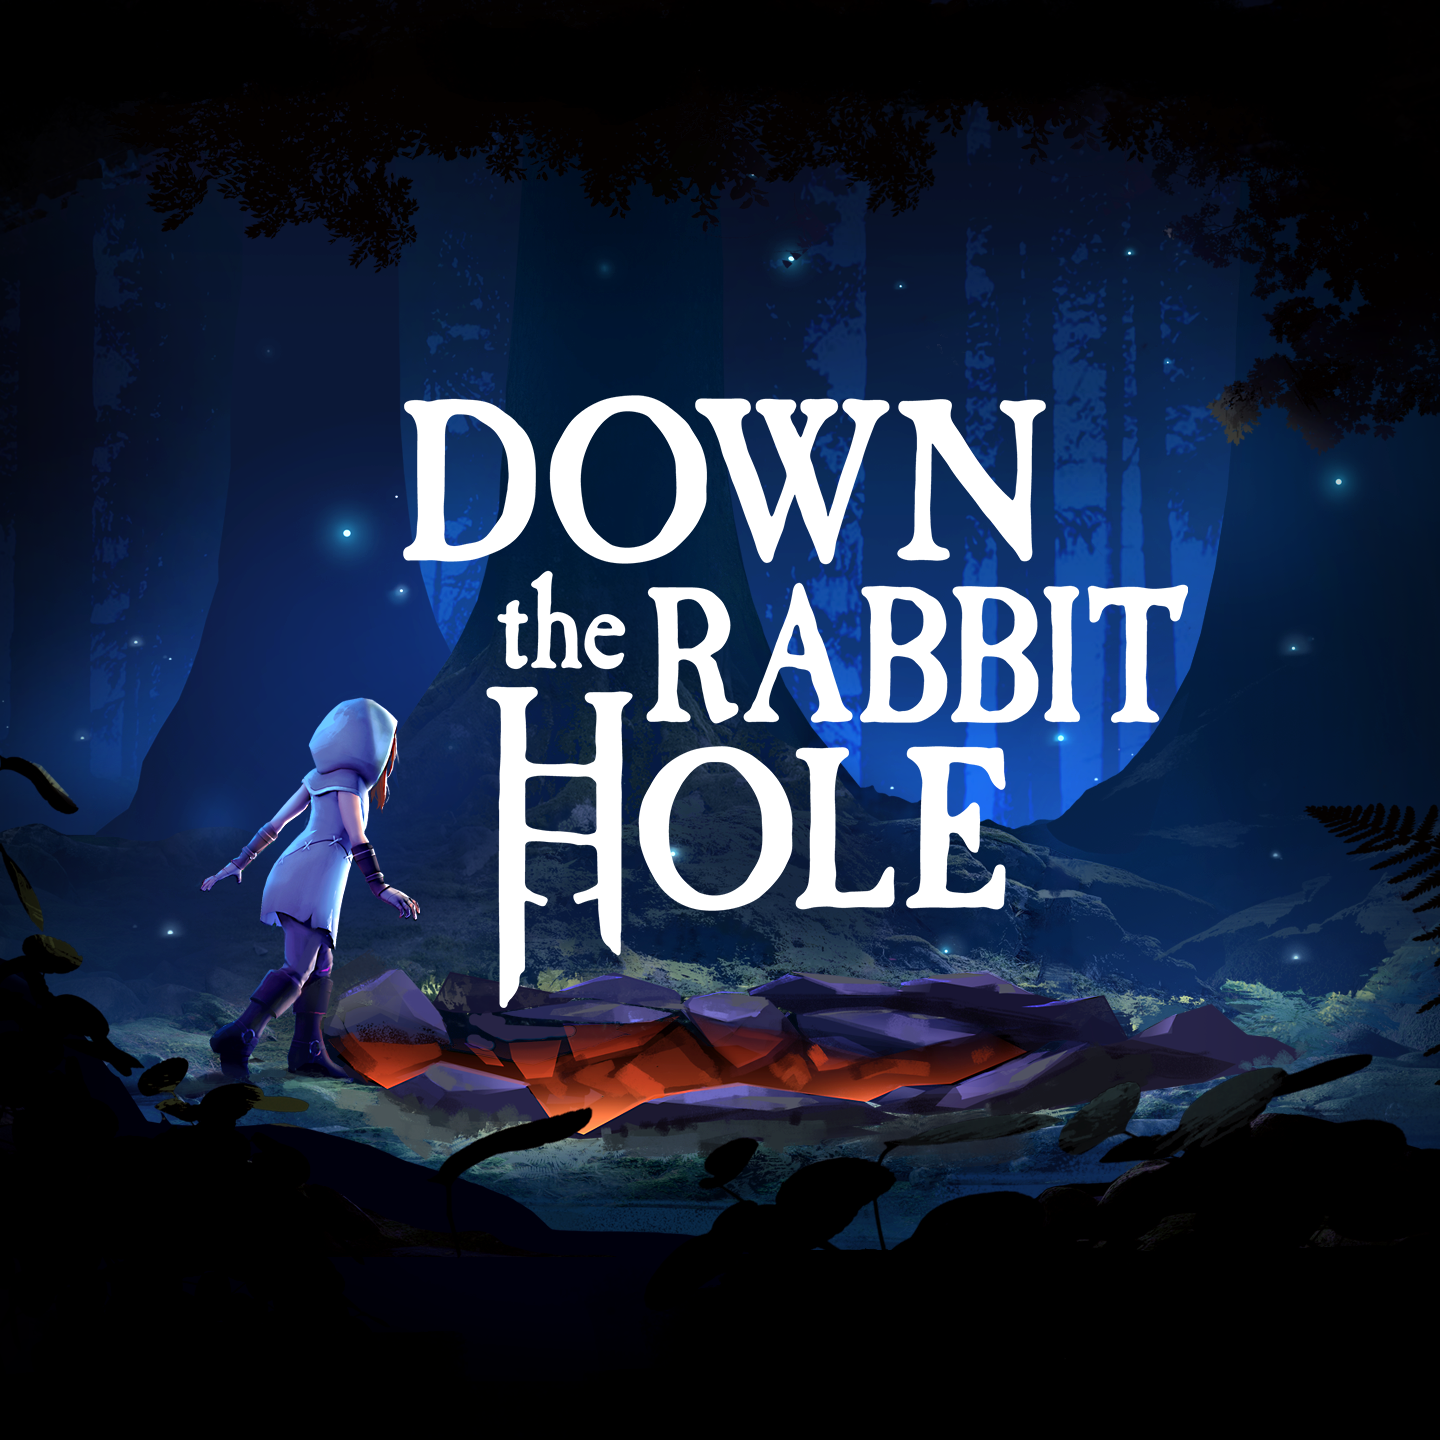 Rabbit hole full version. Down the Rabbit hole. Rabbit hole игра. The Rabbit hole VR. Down the Rabit hole.